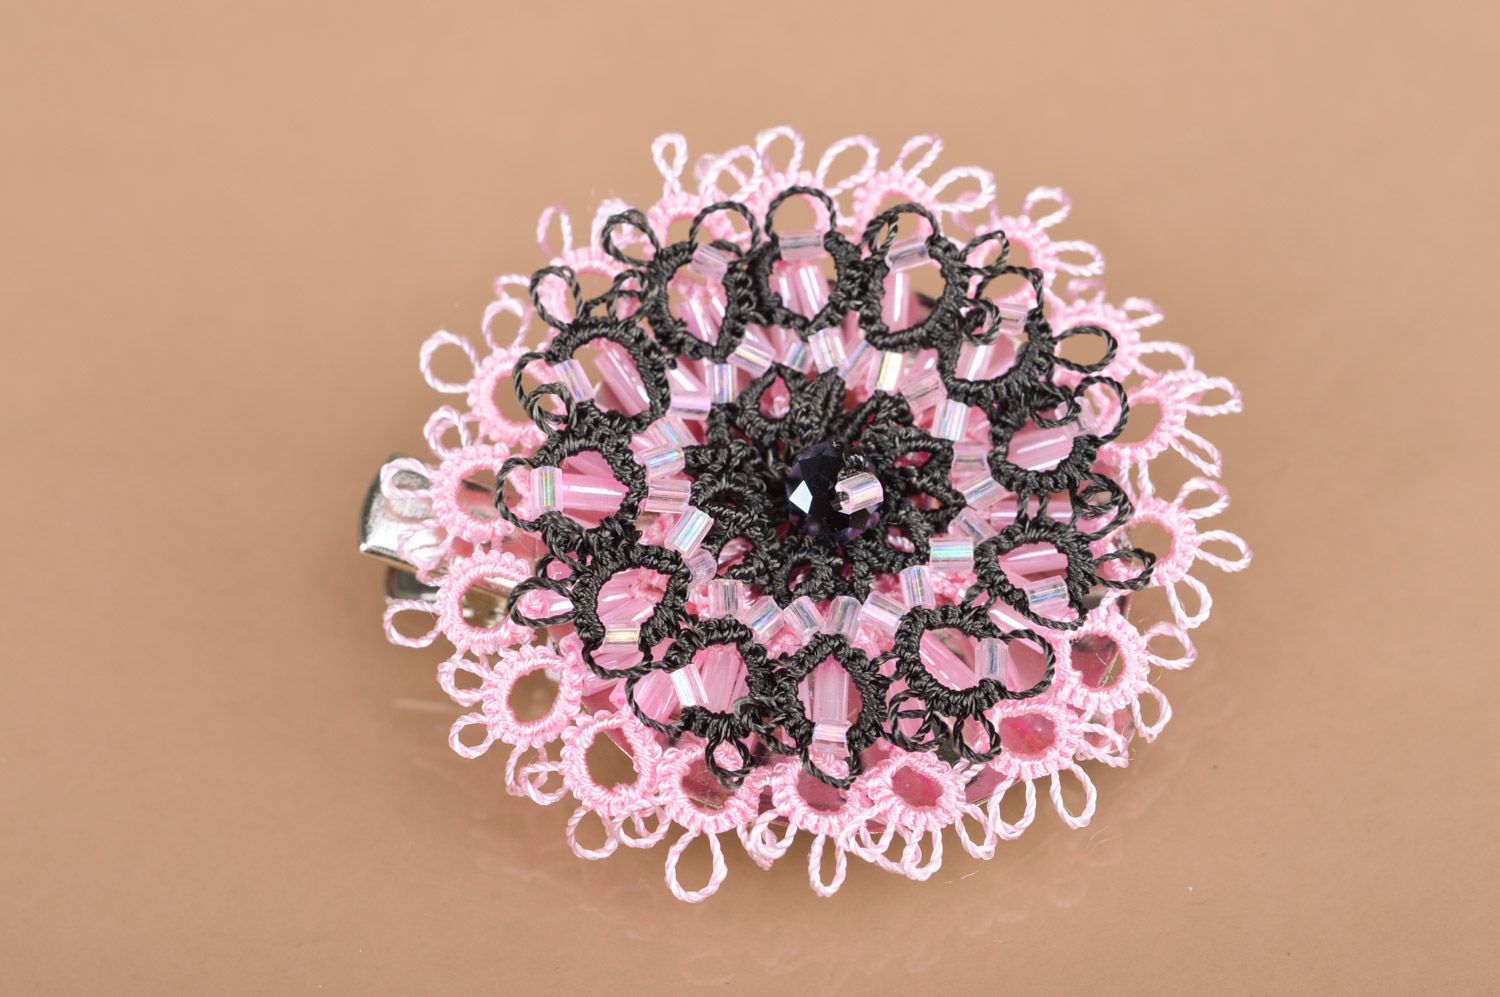 Брошь заколка в технике анкарс цветок розовая с чешским бисером ручная работа фото 3